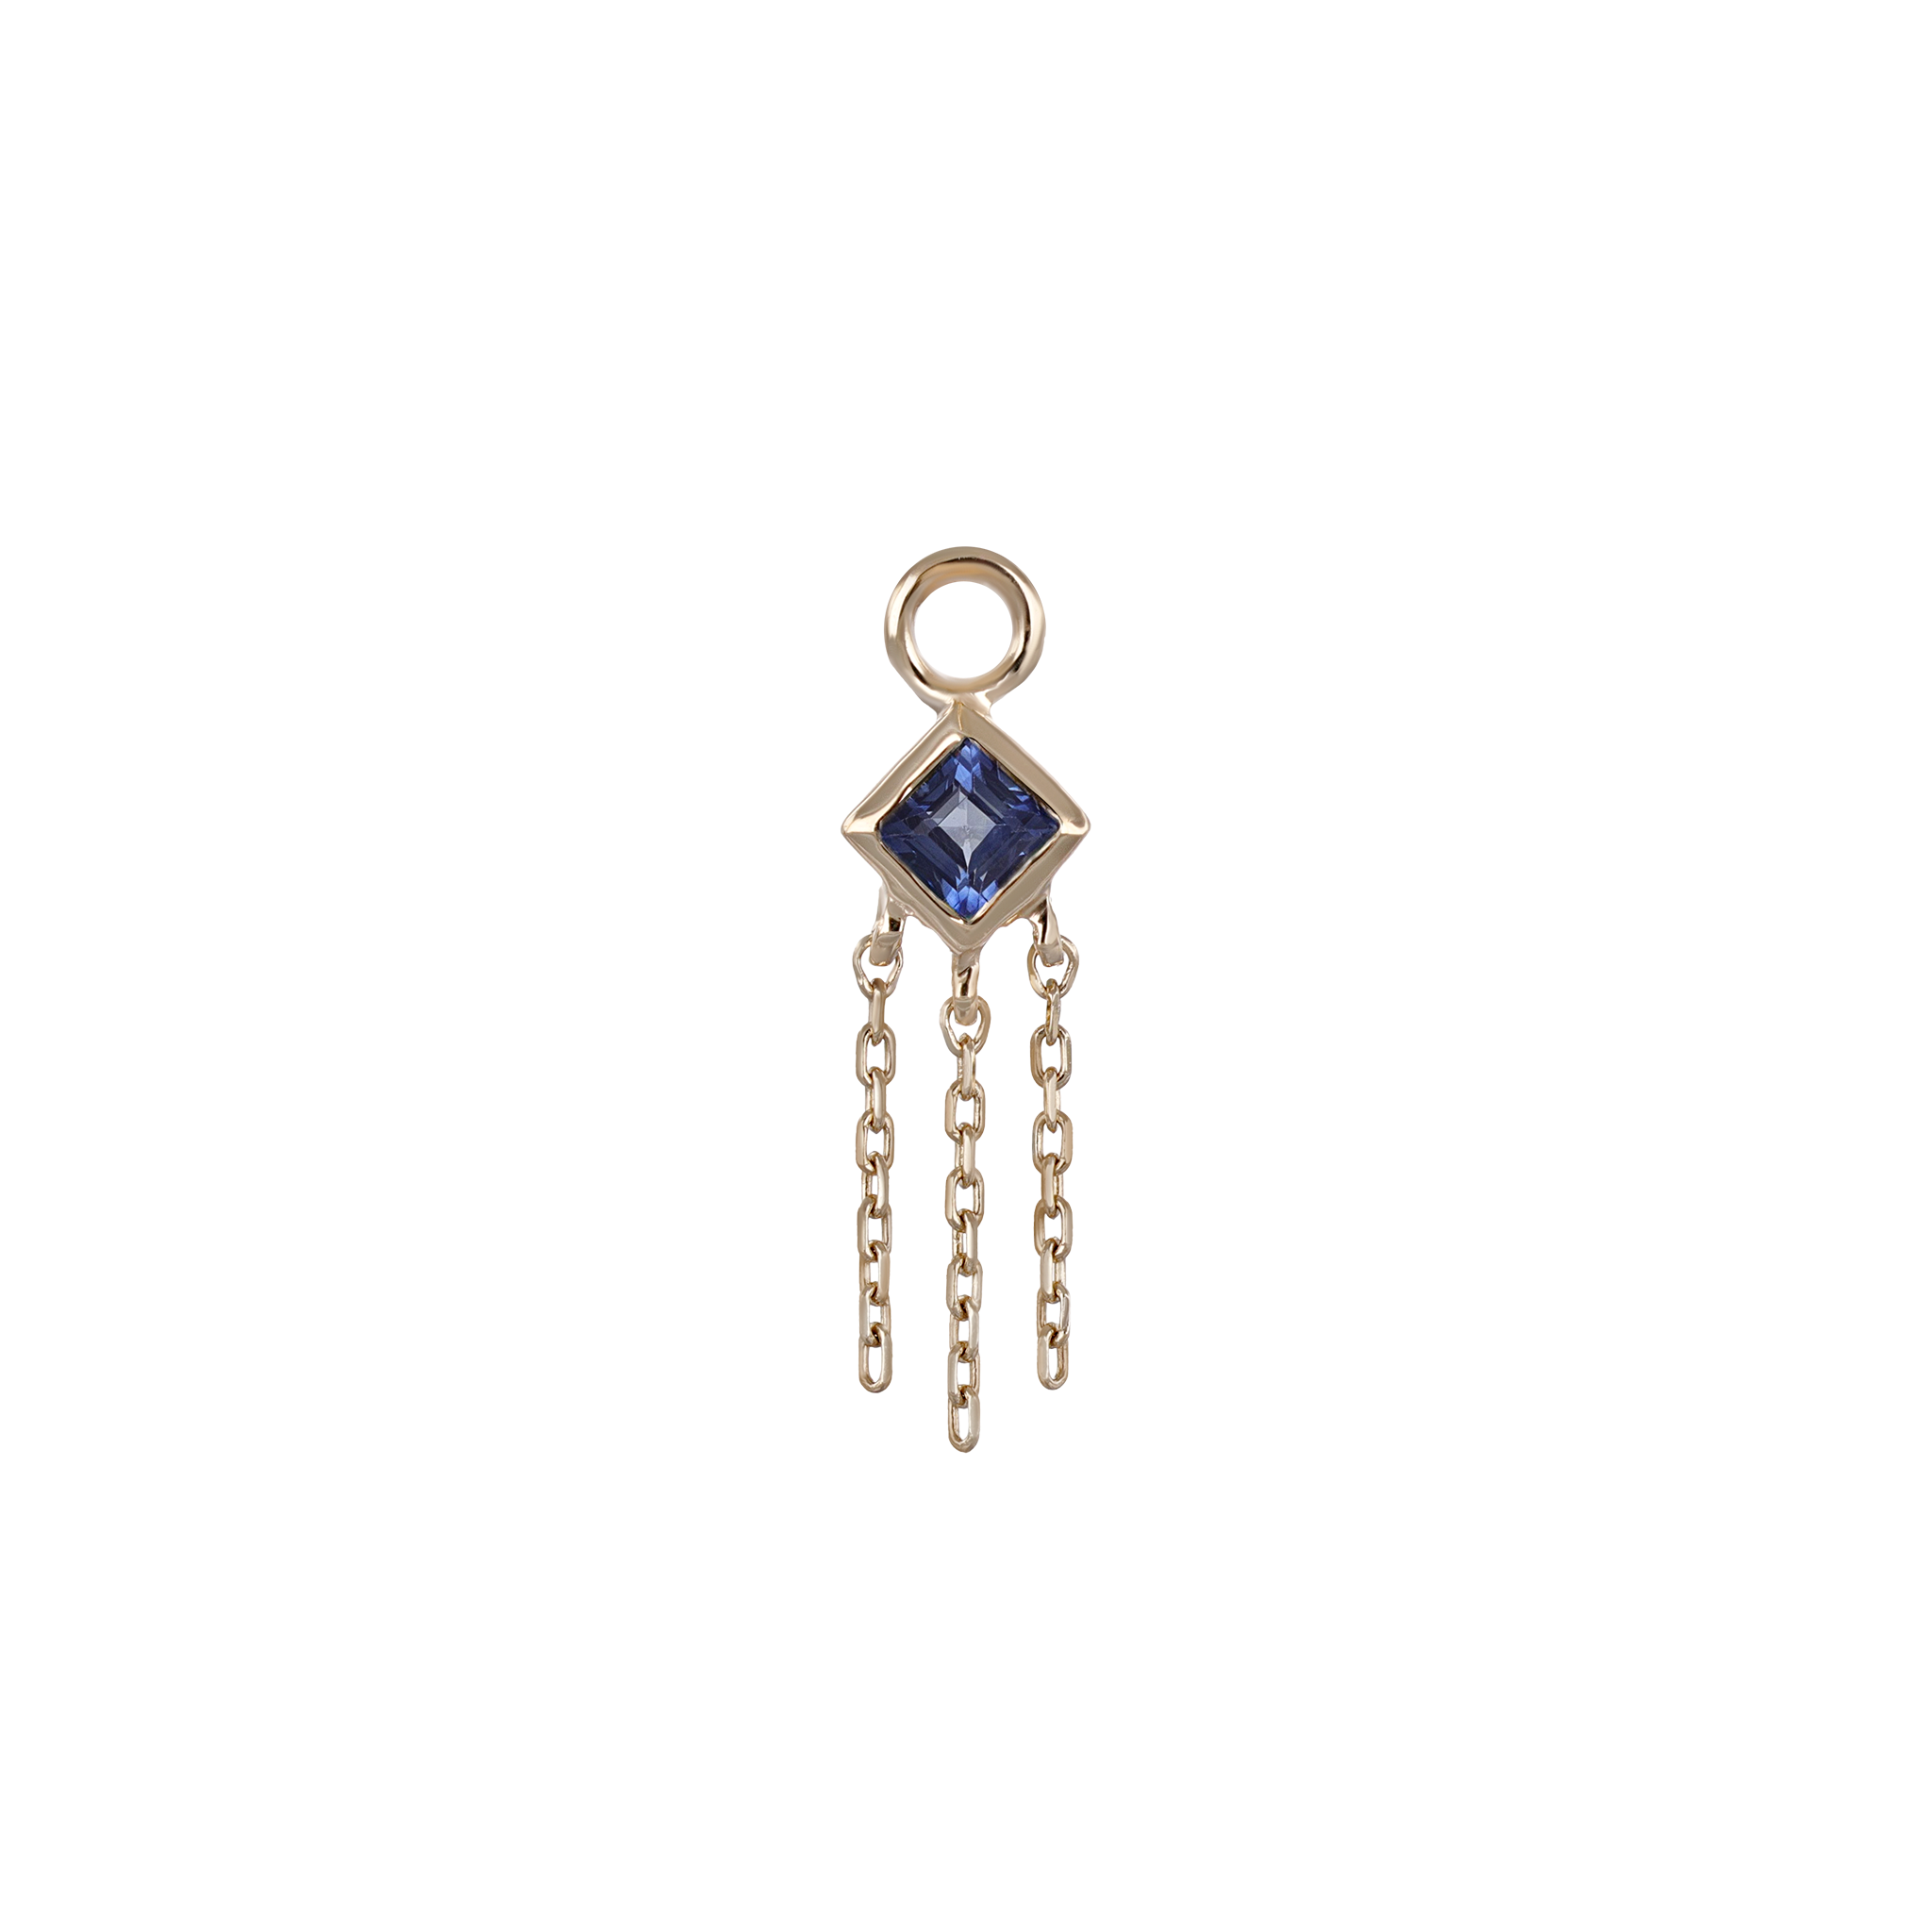 Neo Sapphire 14K gold chain charm